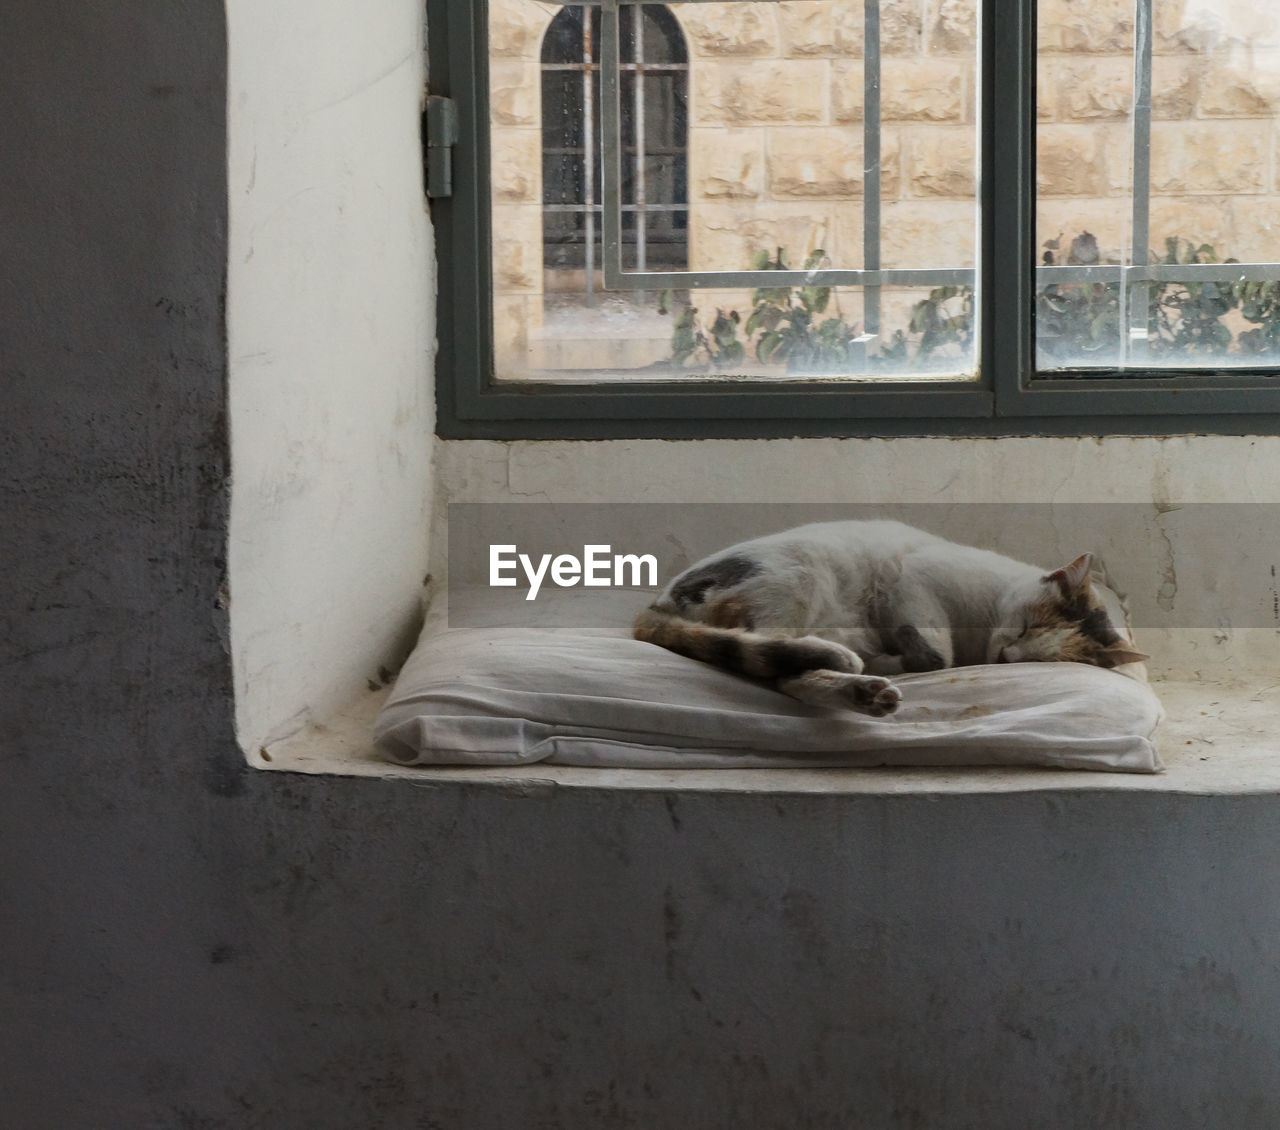 CAT SLEEPING ON WINDOW IN ROOM